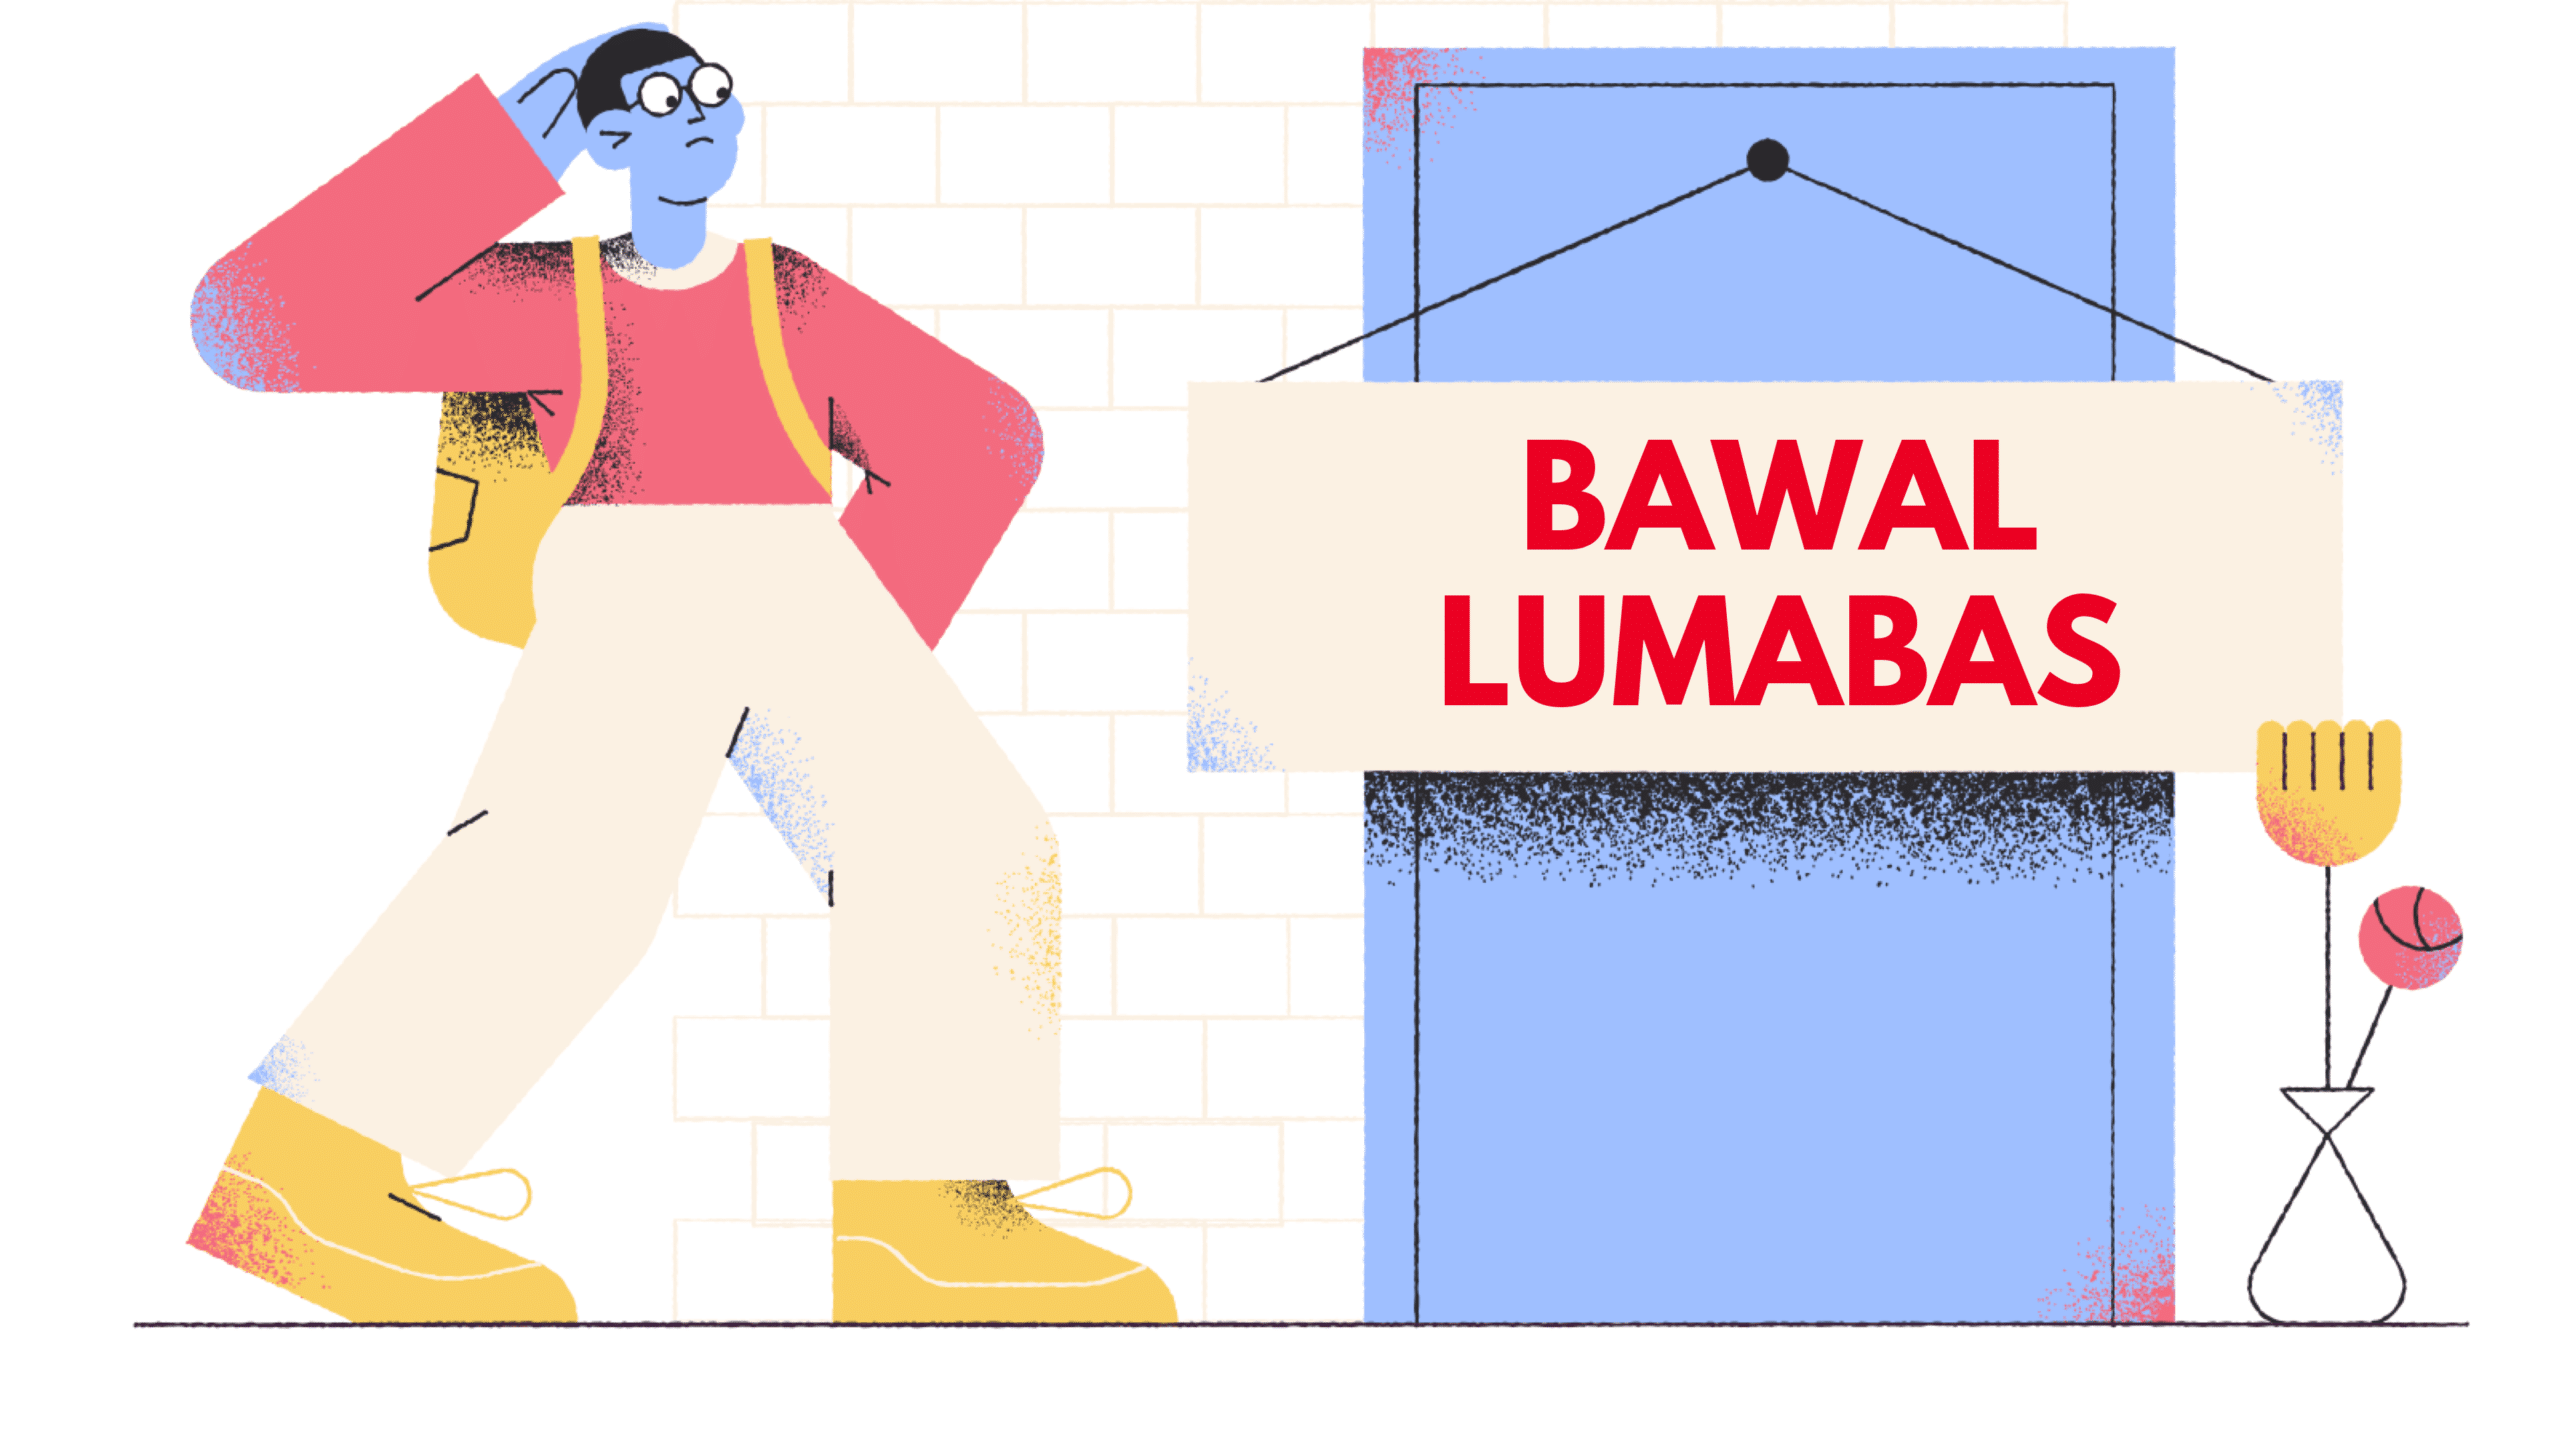 Bawal lumabas - a man standing next to a sign featuring Kim Chiu.